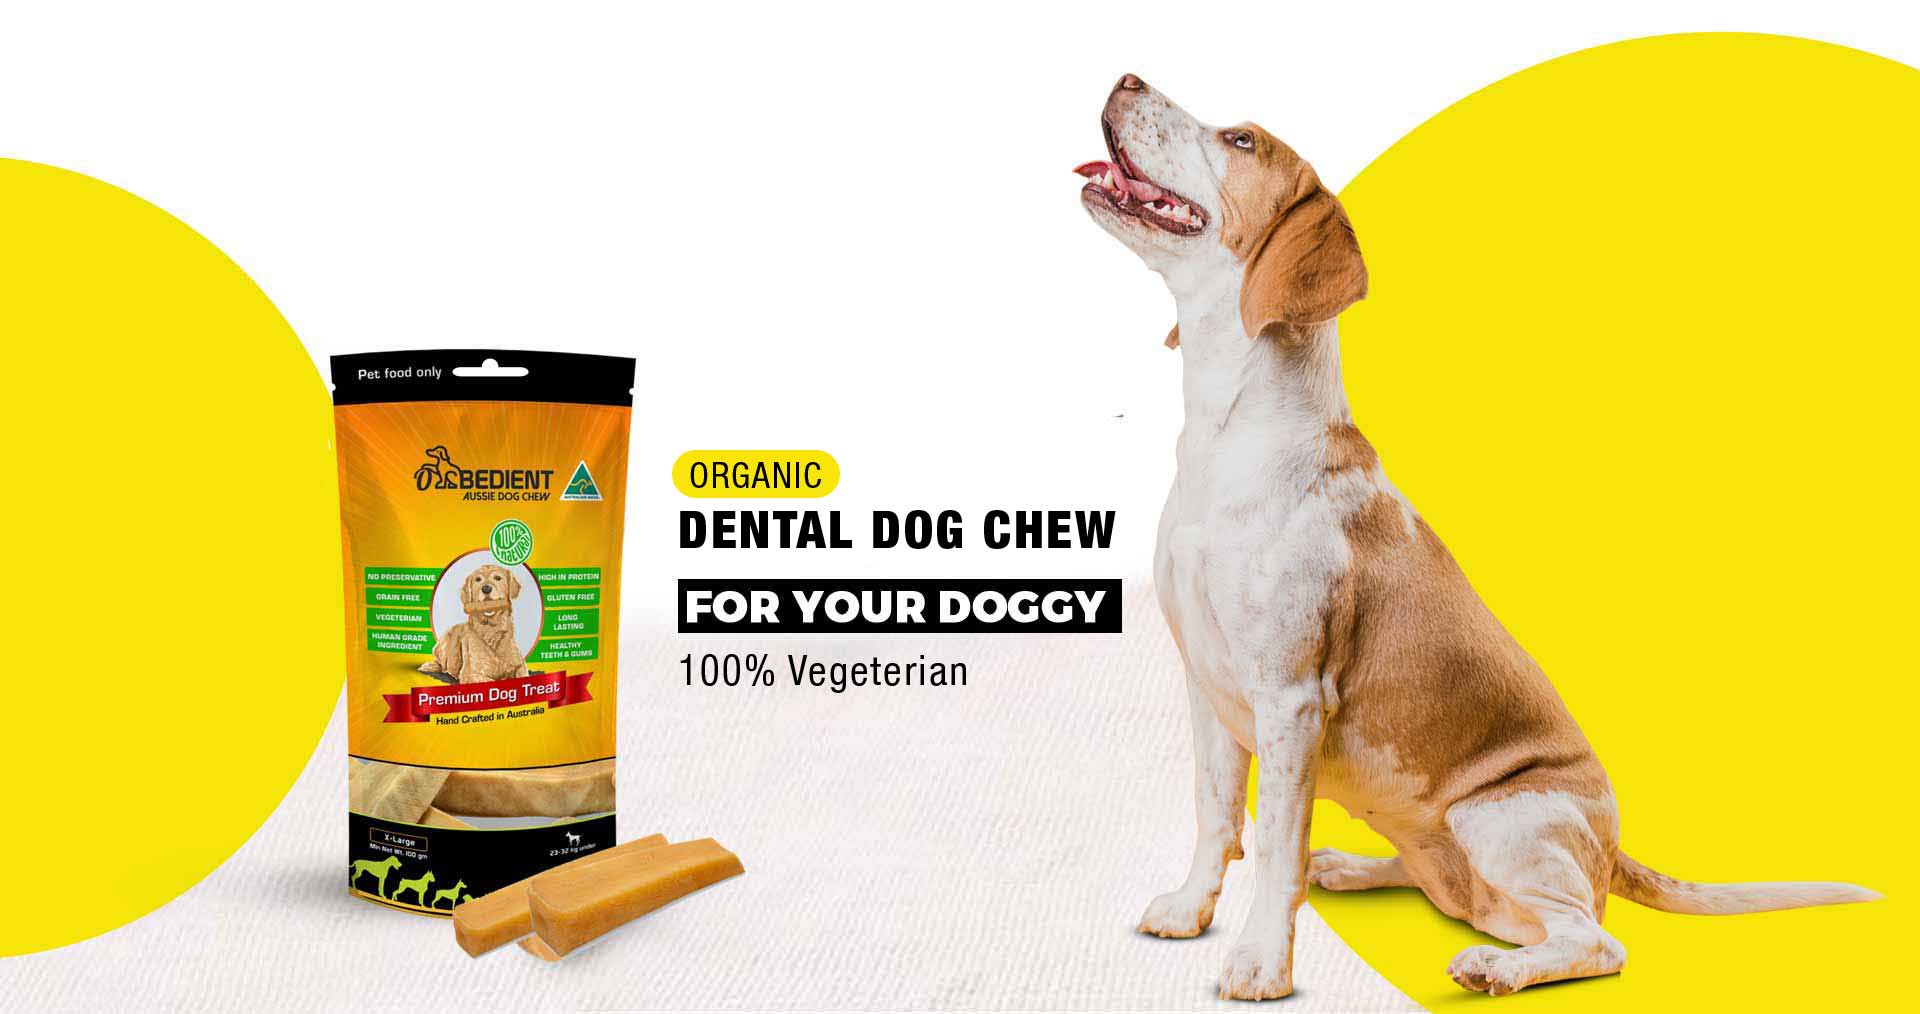 obedient-organic-dental-dog-chew-australia-WA